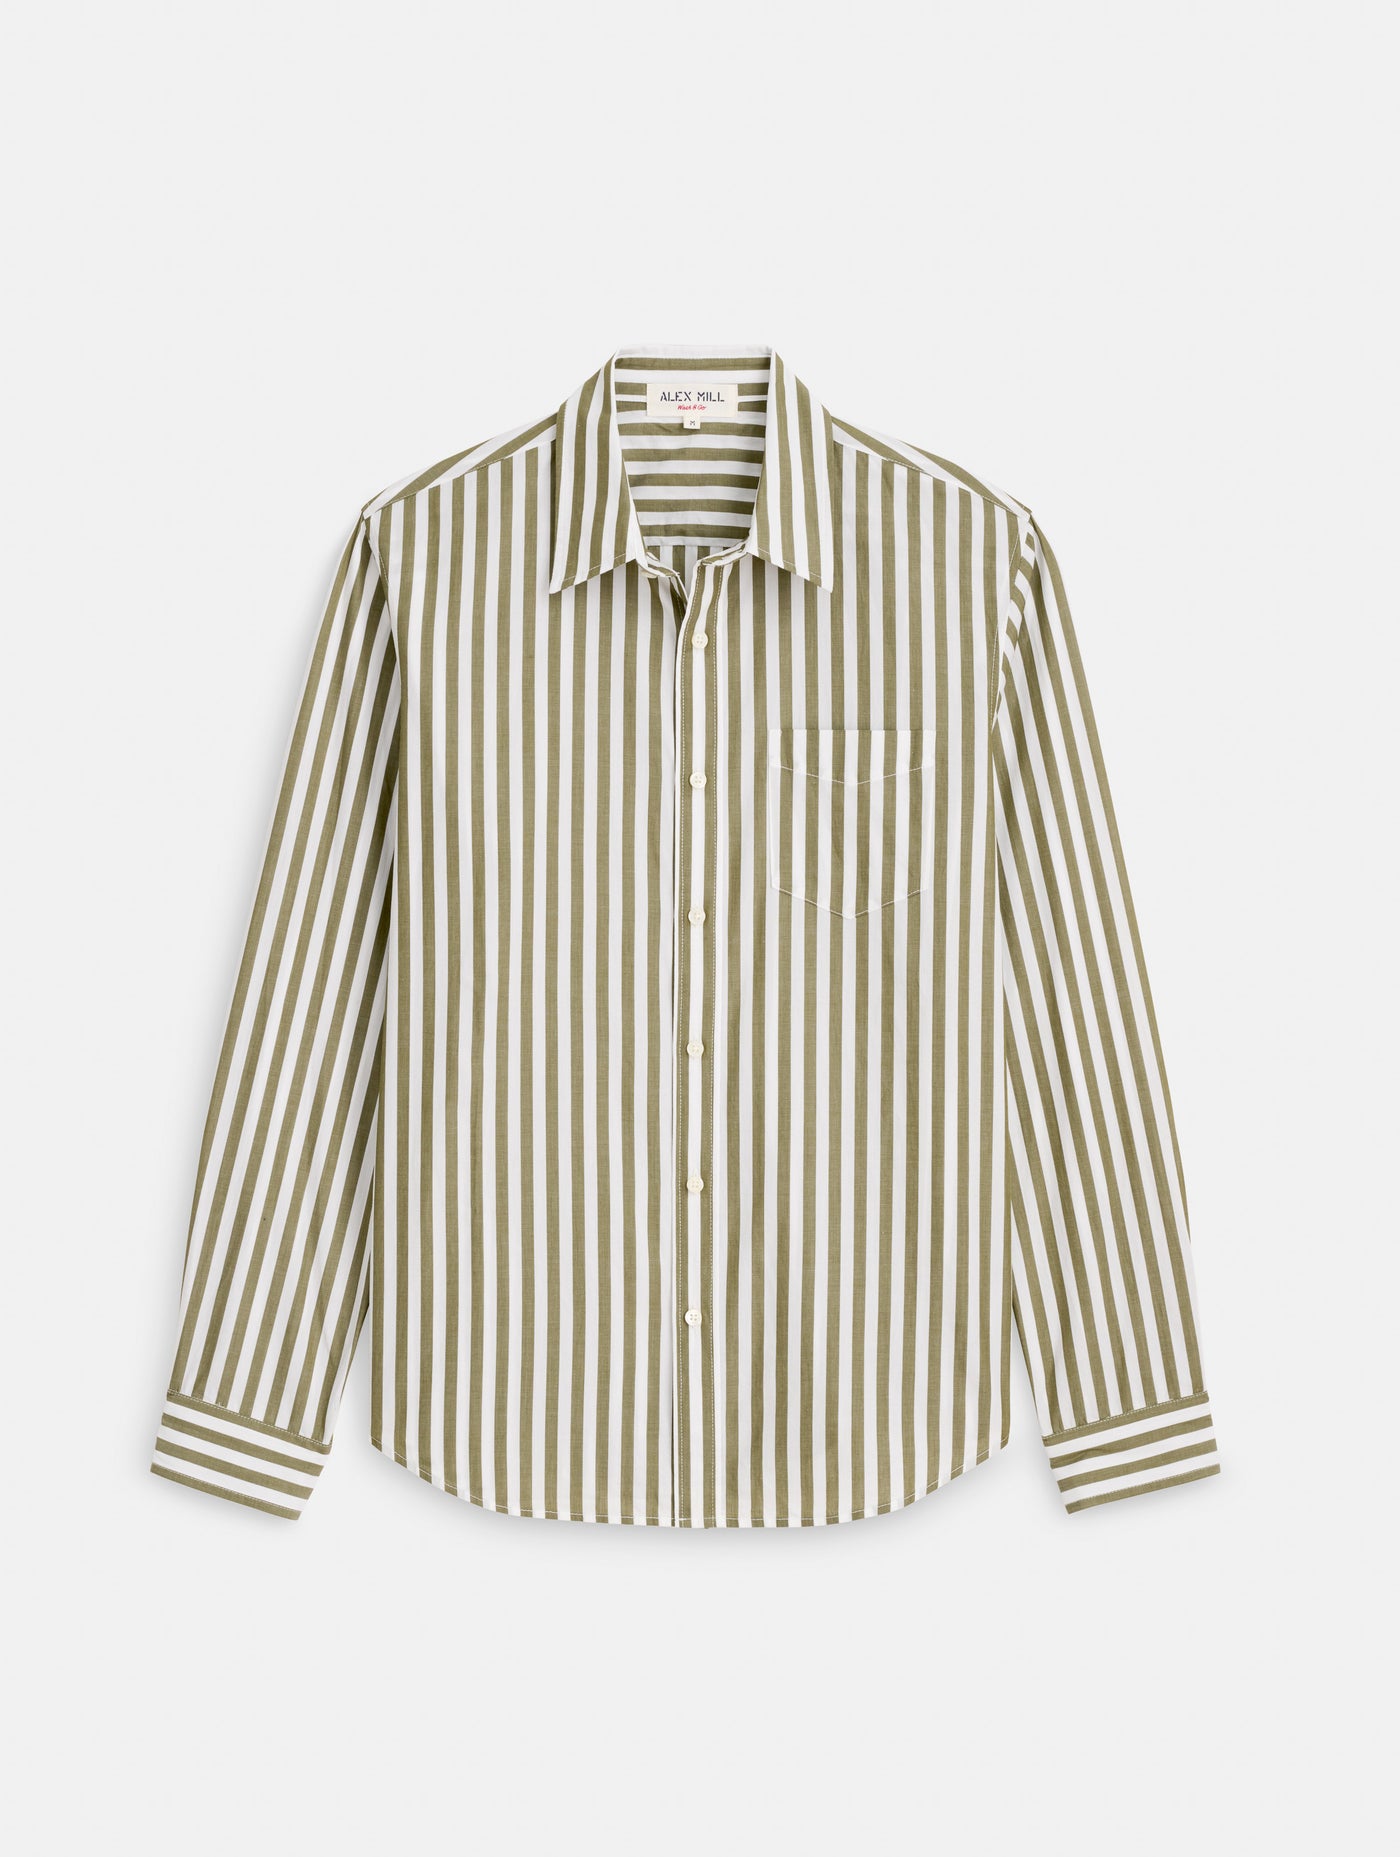 Mill Shirt in Wide Striped Portuguese Poplin